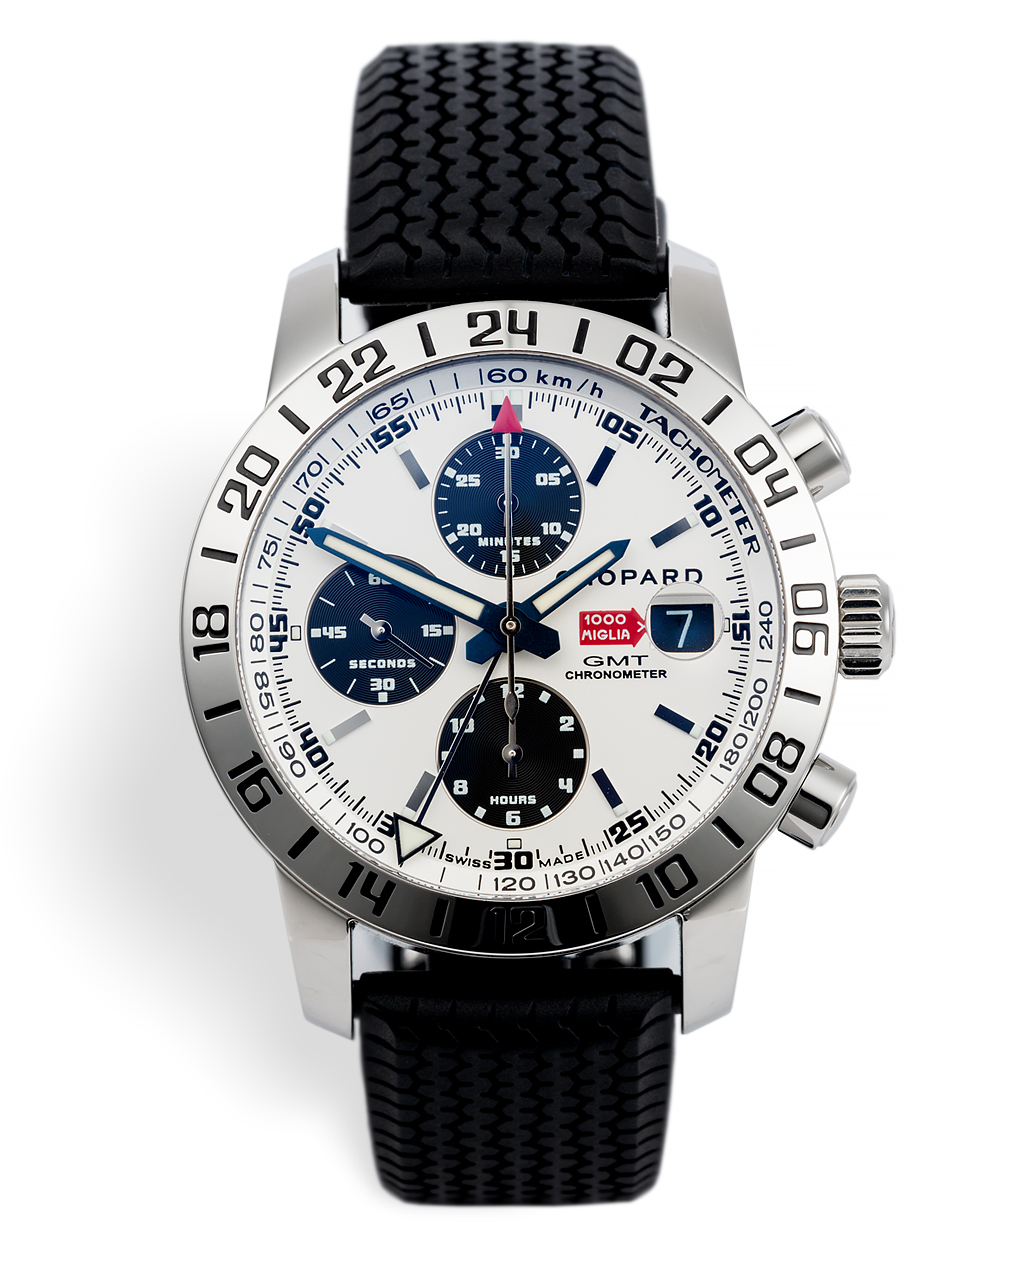 Chopard Mille Miglia GMT 16/8994 Men's Watch in Stainless Steel